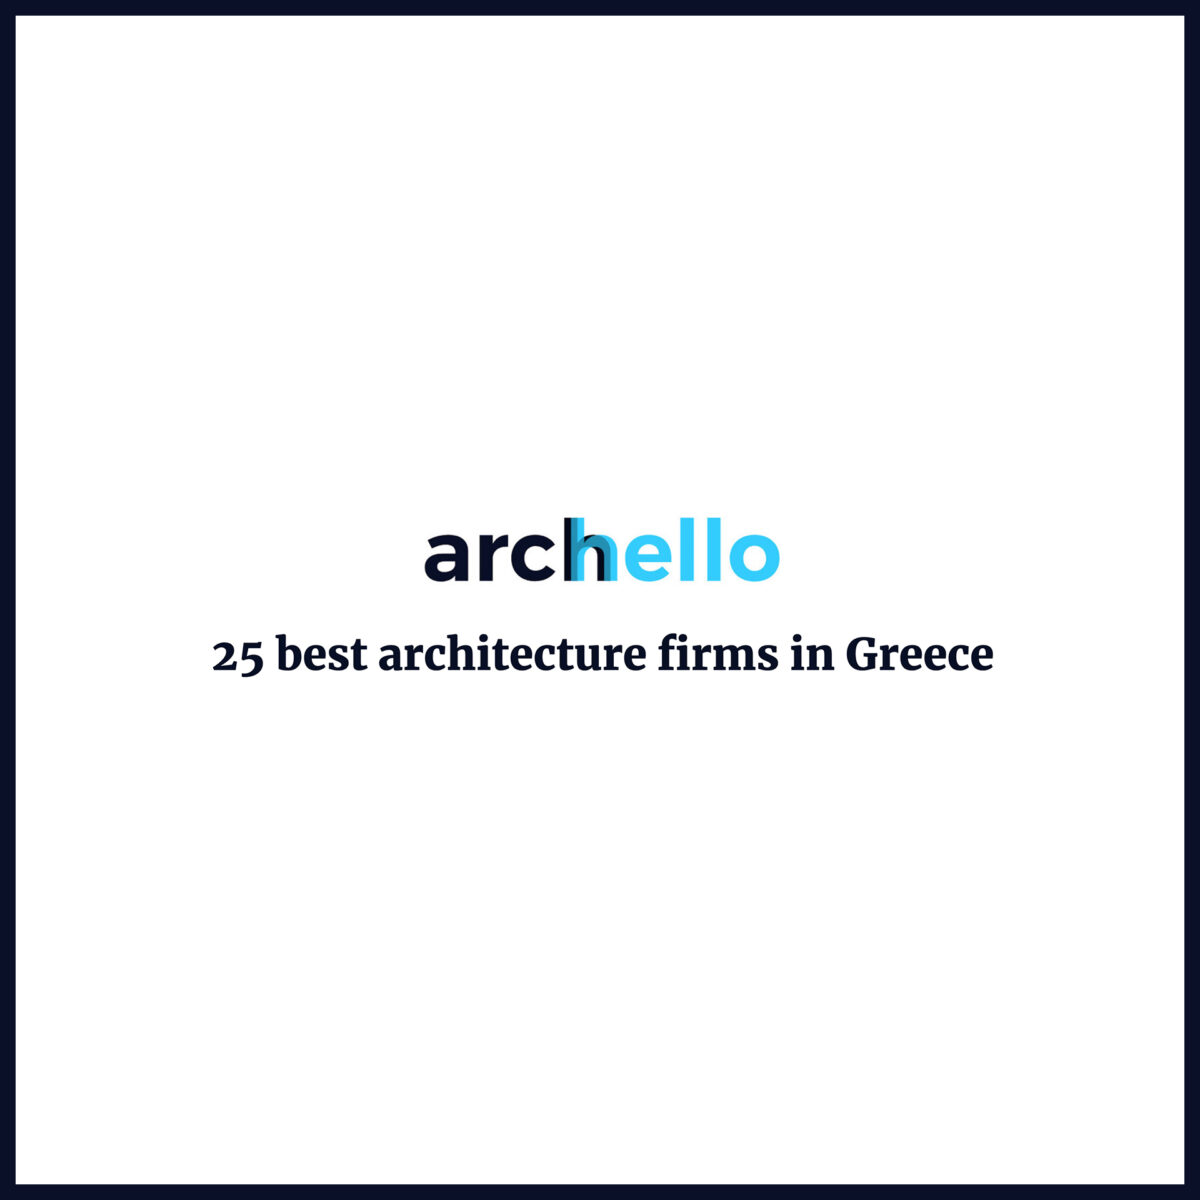 Archello’s 25 Best Architecture firms in Greece